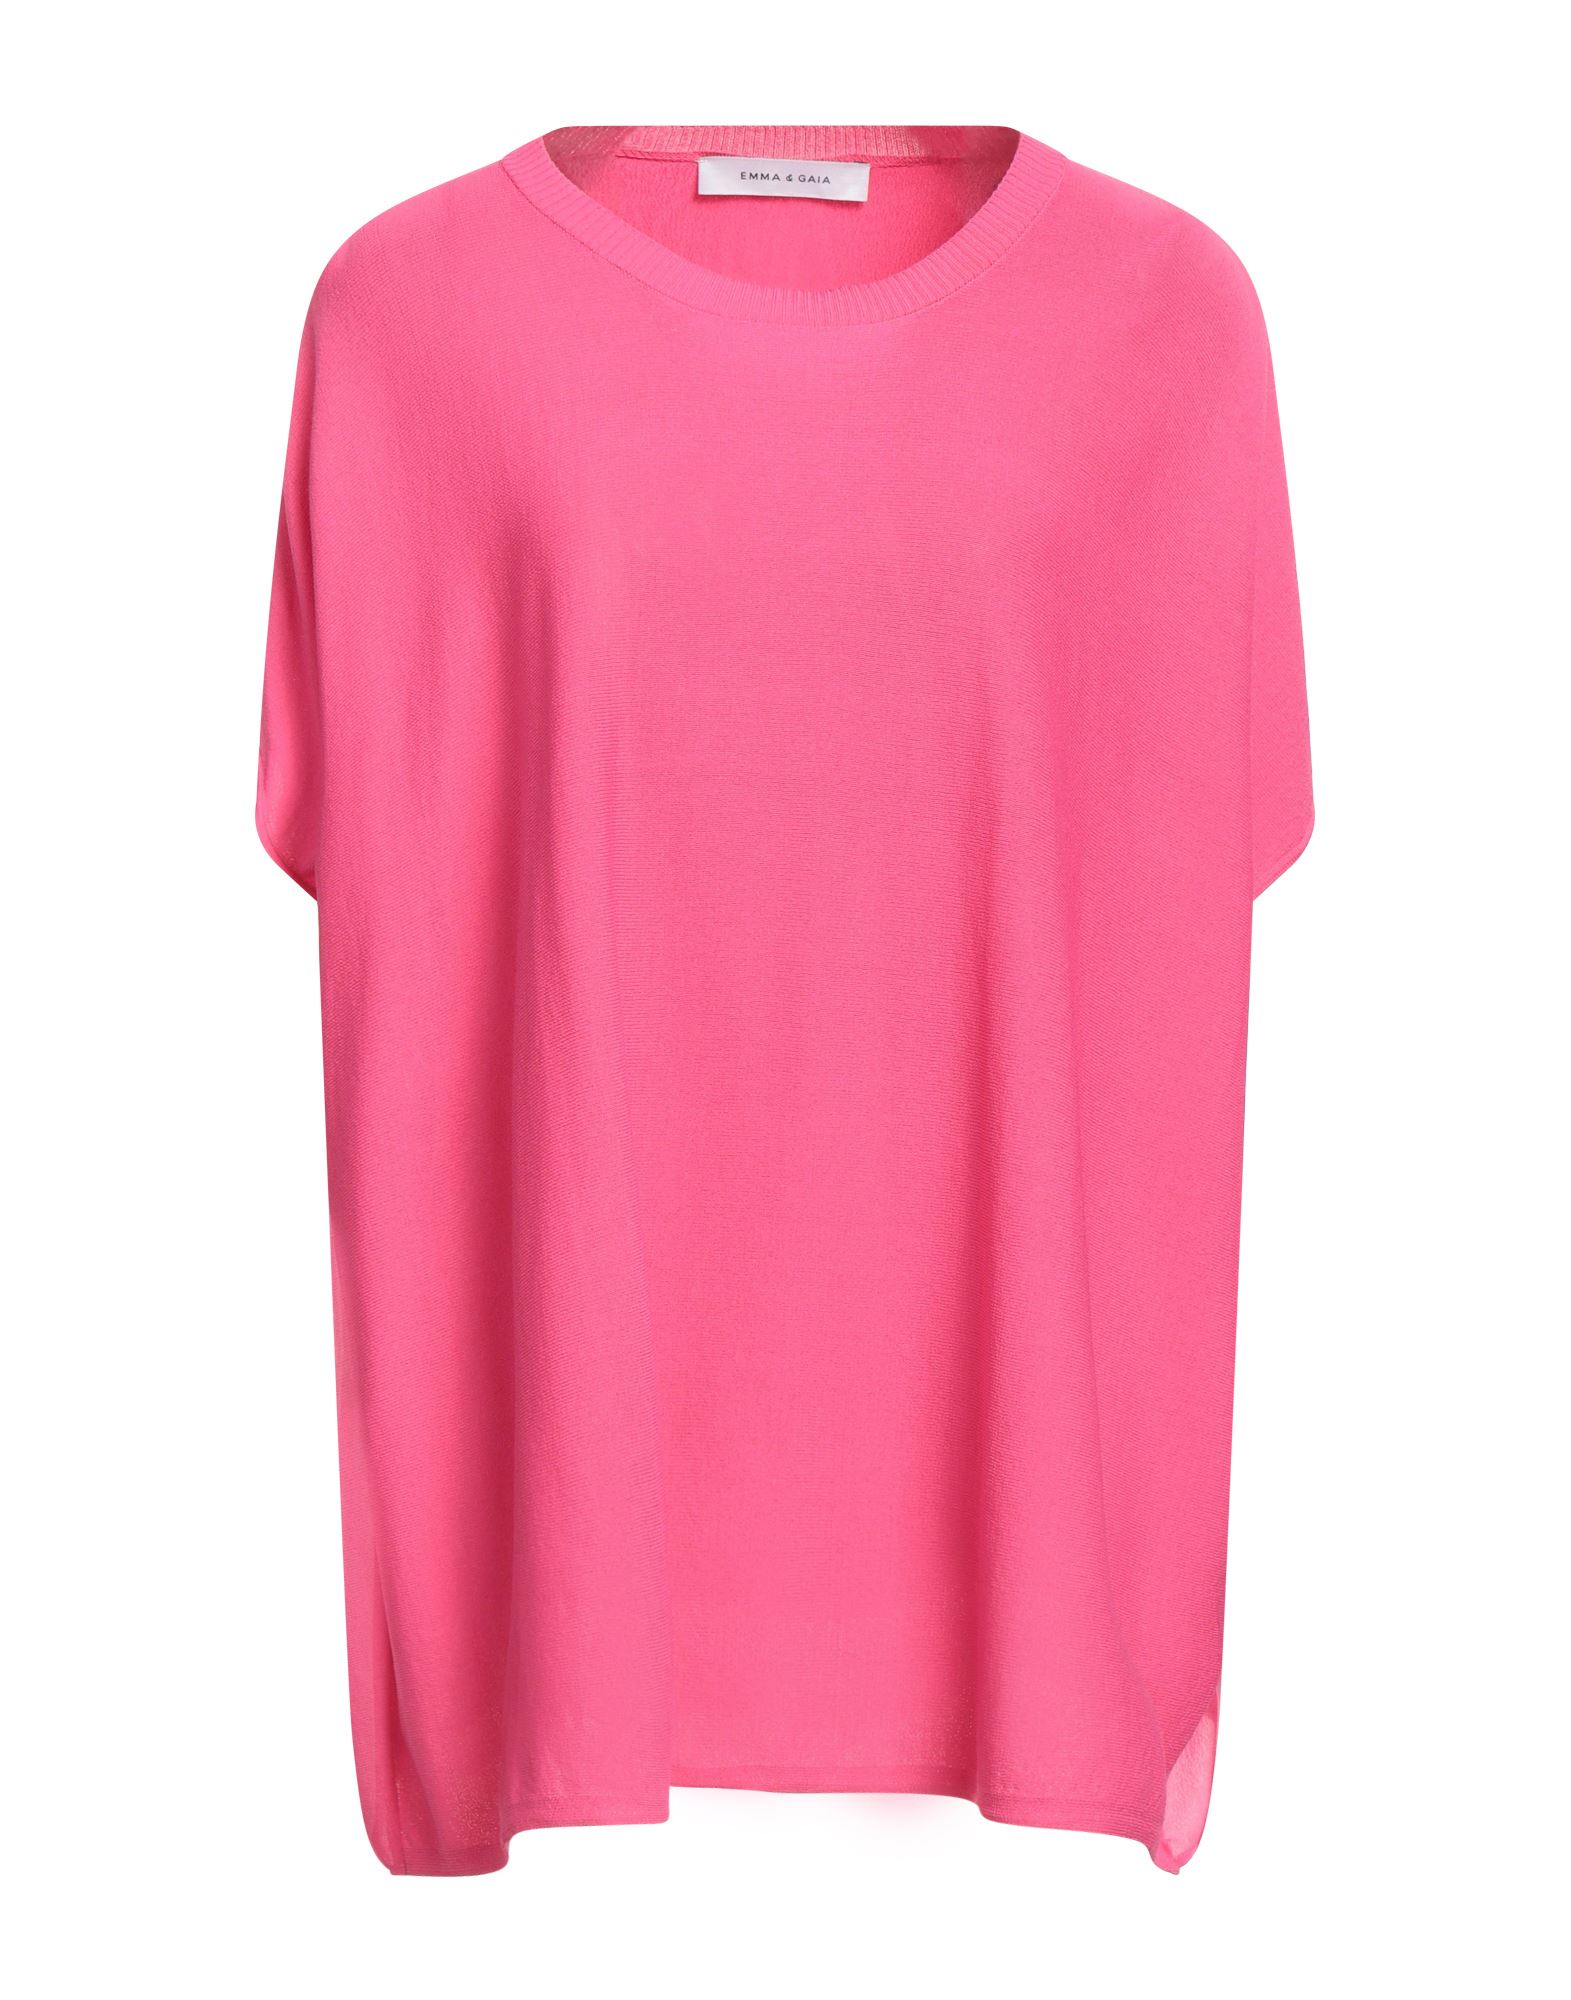 Emma & Gaia T-shirts In Pink